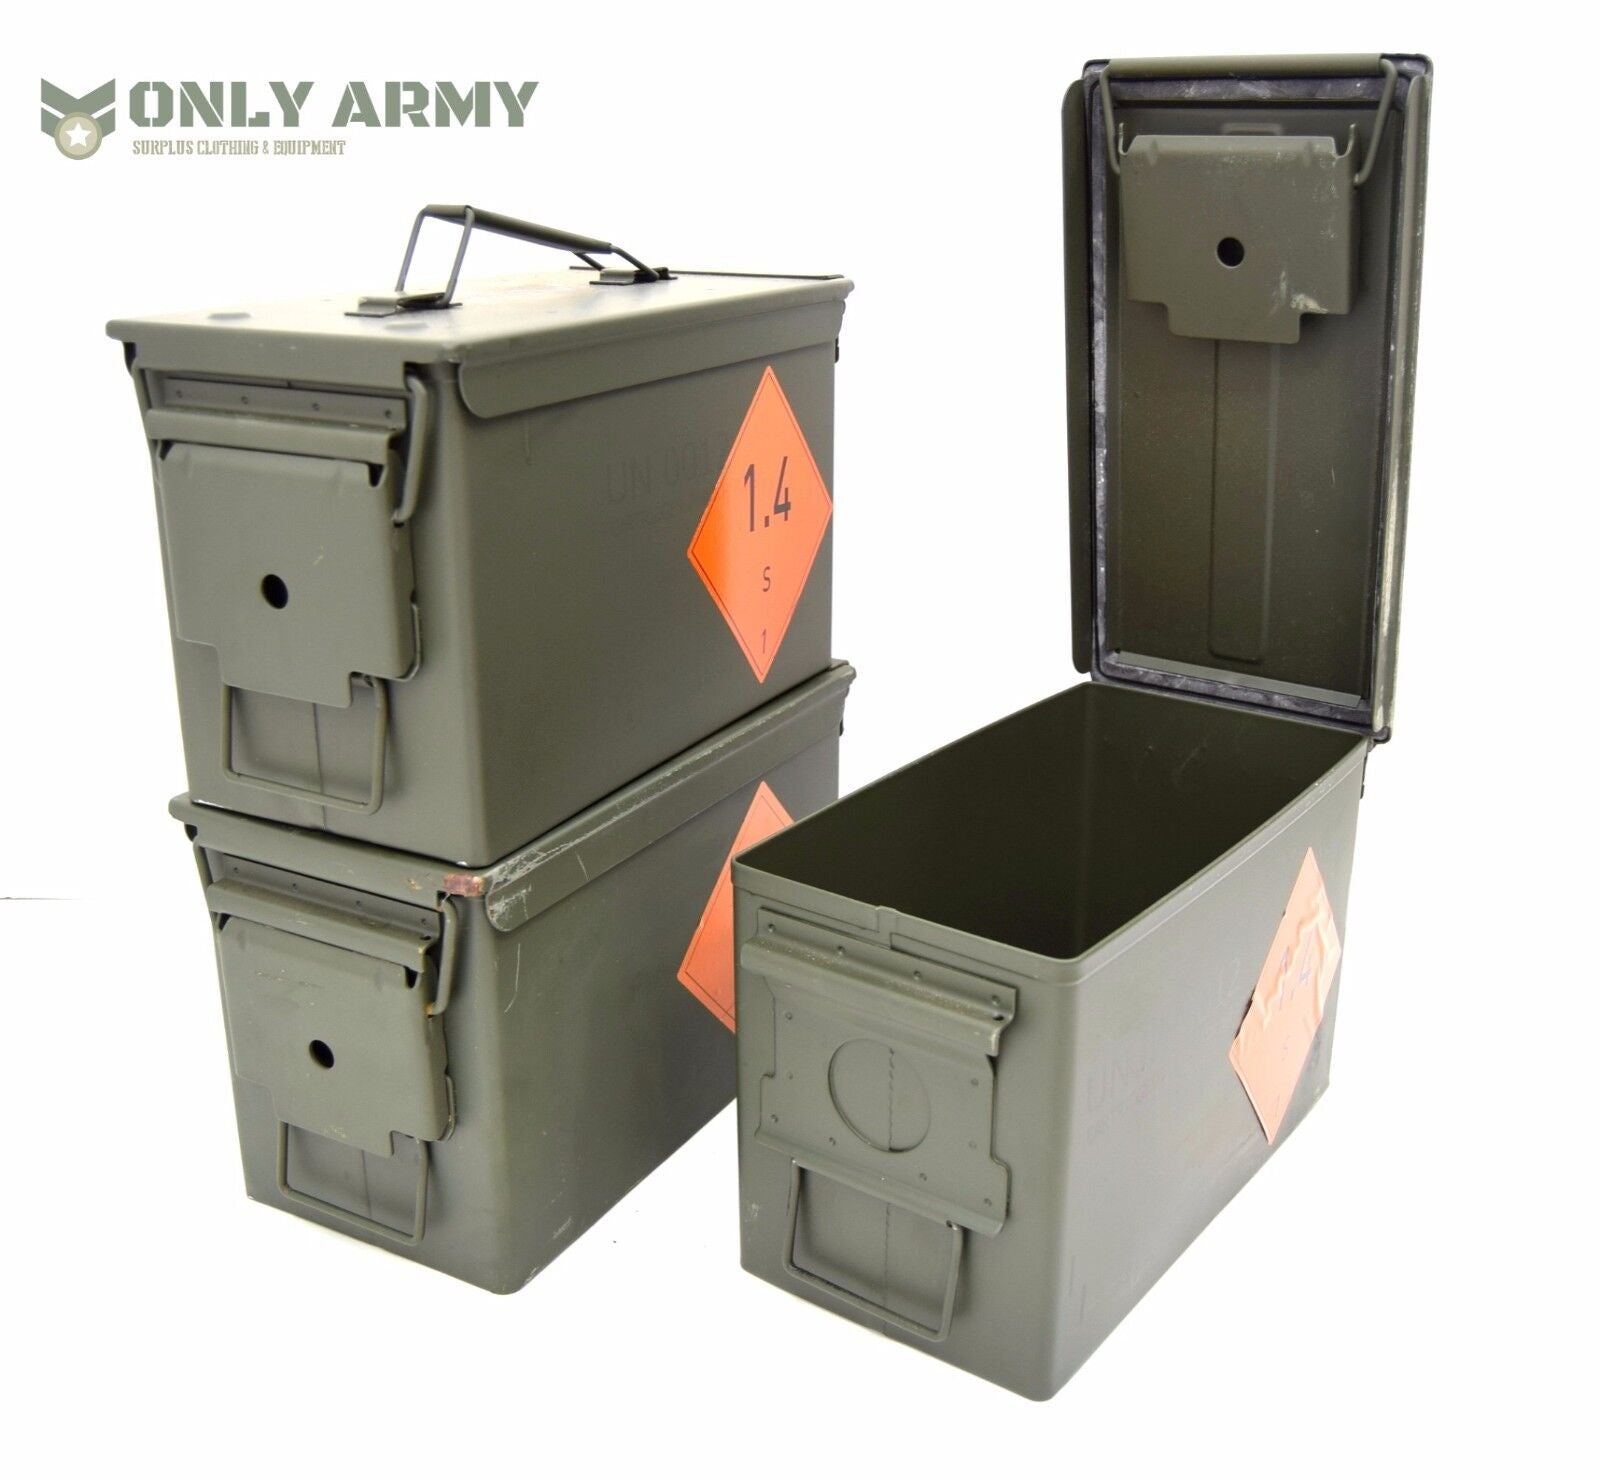 NEW British Army 50Cal Ammo Box Storage Ammunition Surplus Issue Tool Box Metal